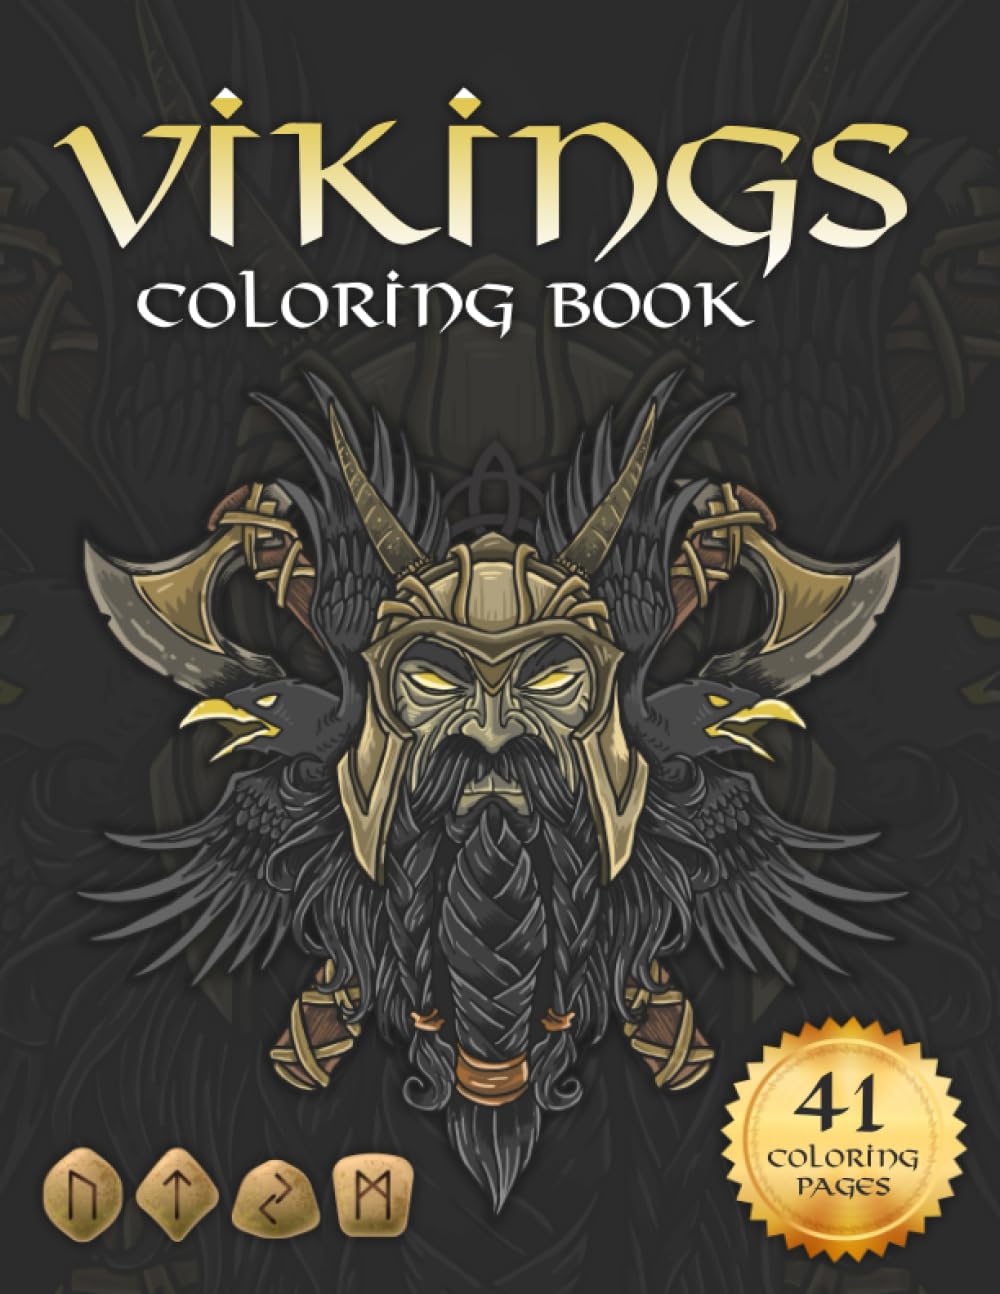 Tattoo books on Amazon-Viking coloring book